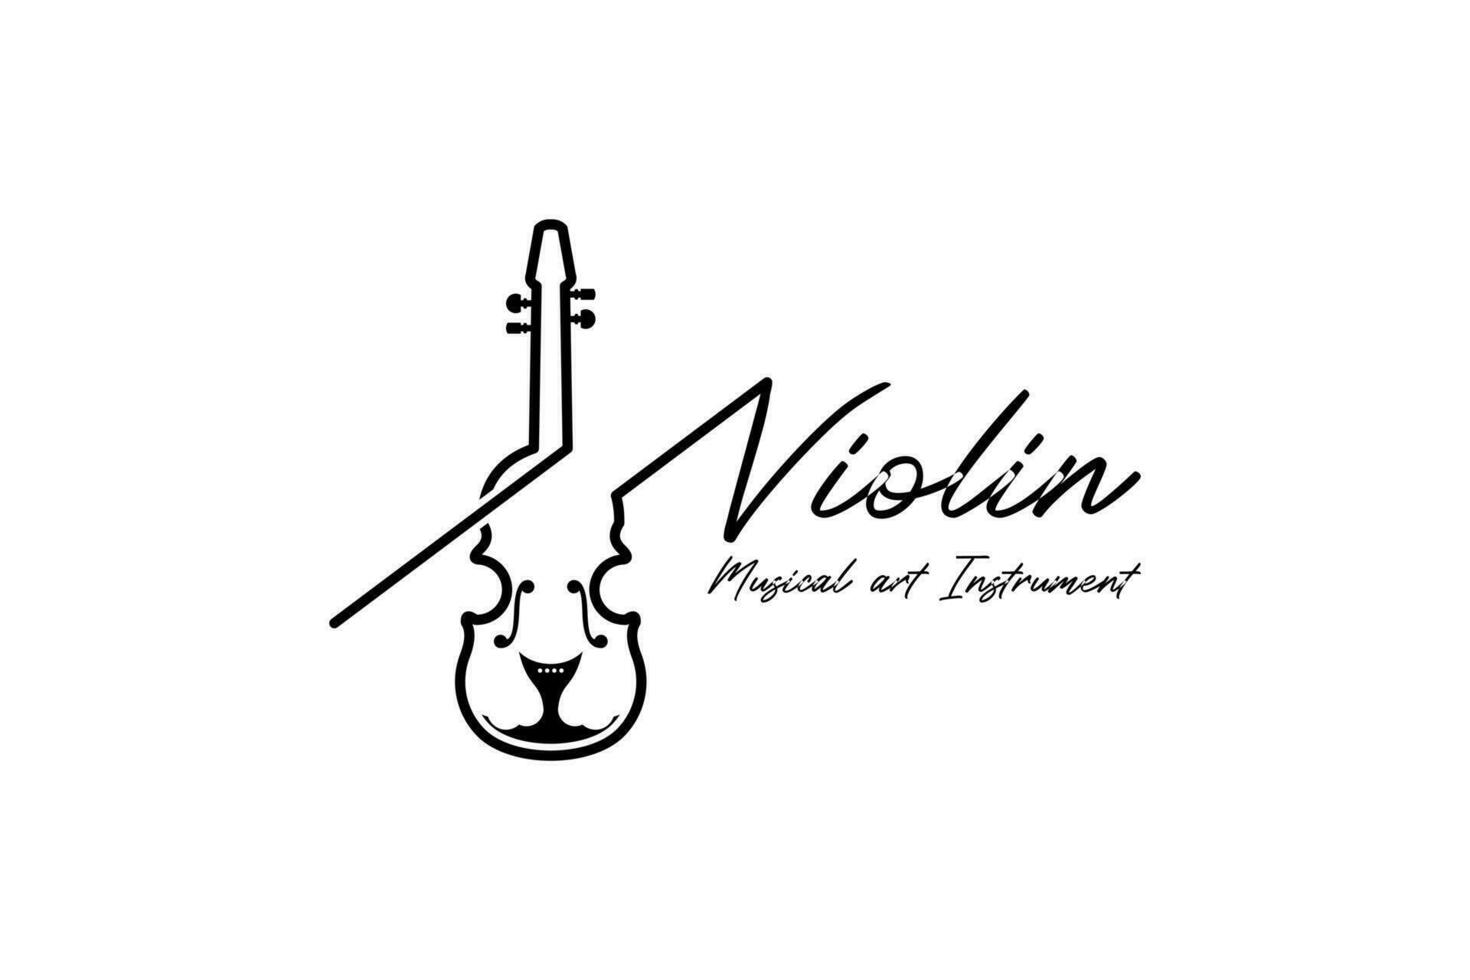 Violin music logo vector illustration design with modern creative line art style